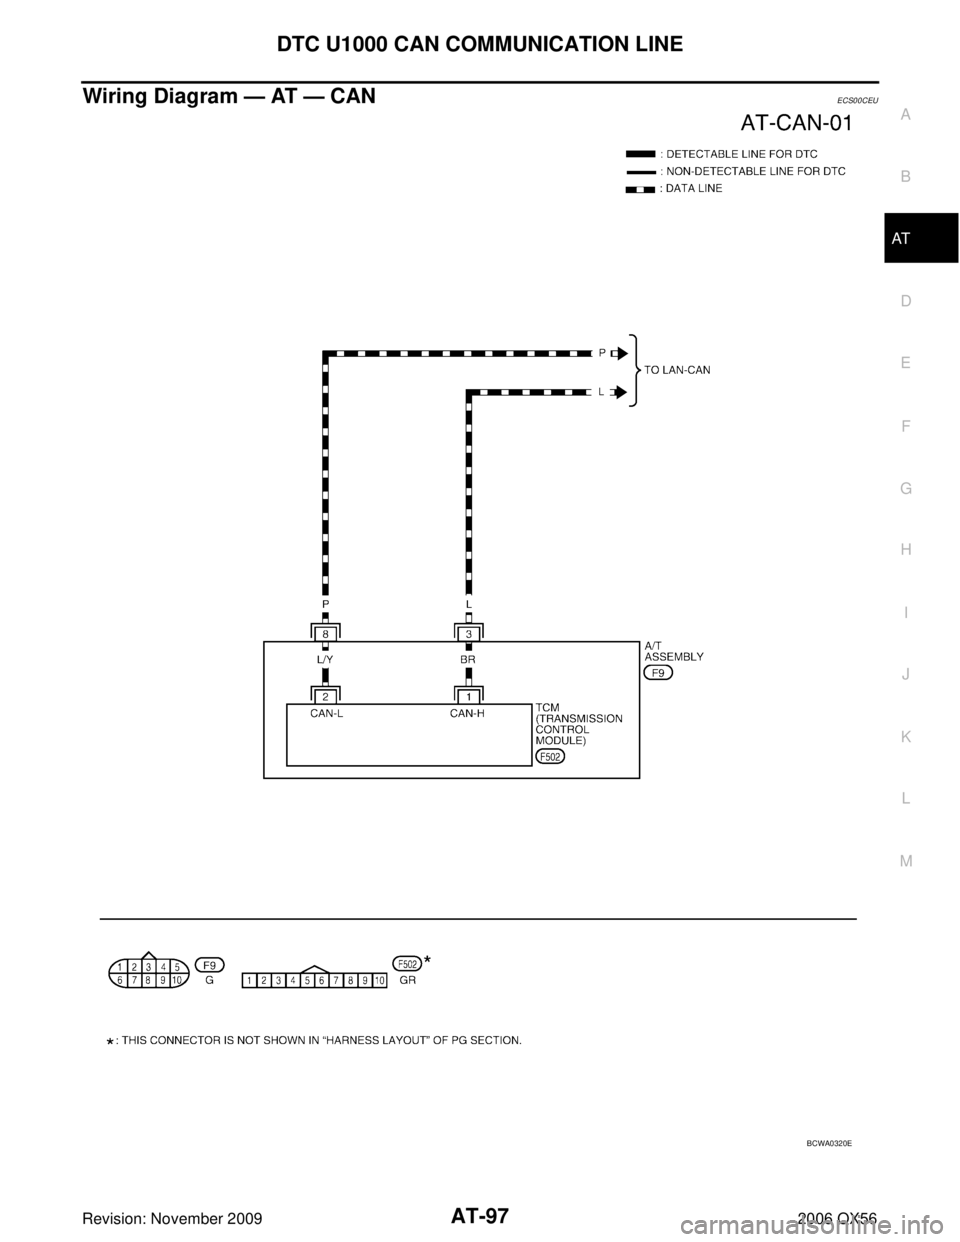 INFINITI QX56 2006  Factory Service Manual DTC U1000 CAN COMMUNICATION LINEAT-97
DE
F
G H
I
J
K L
M A
B
AT
Revision: November 2009 2006 QX56
Wiring Diagram — AT — CANECS00CEU
BCWA0320E 